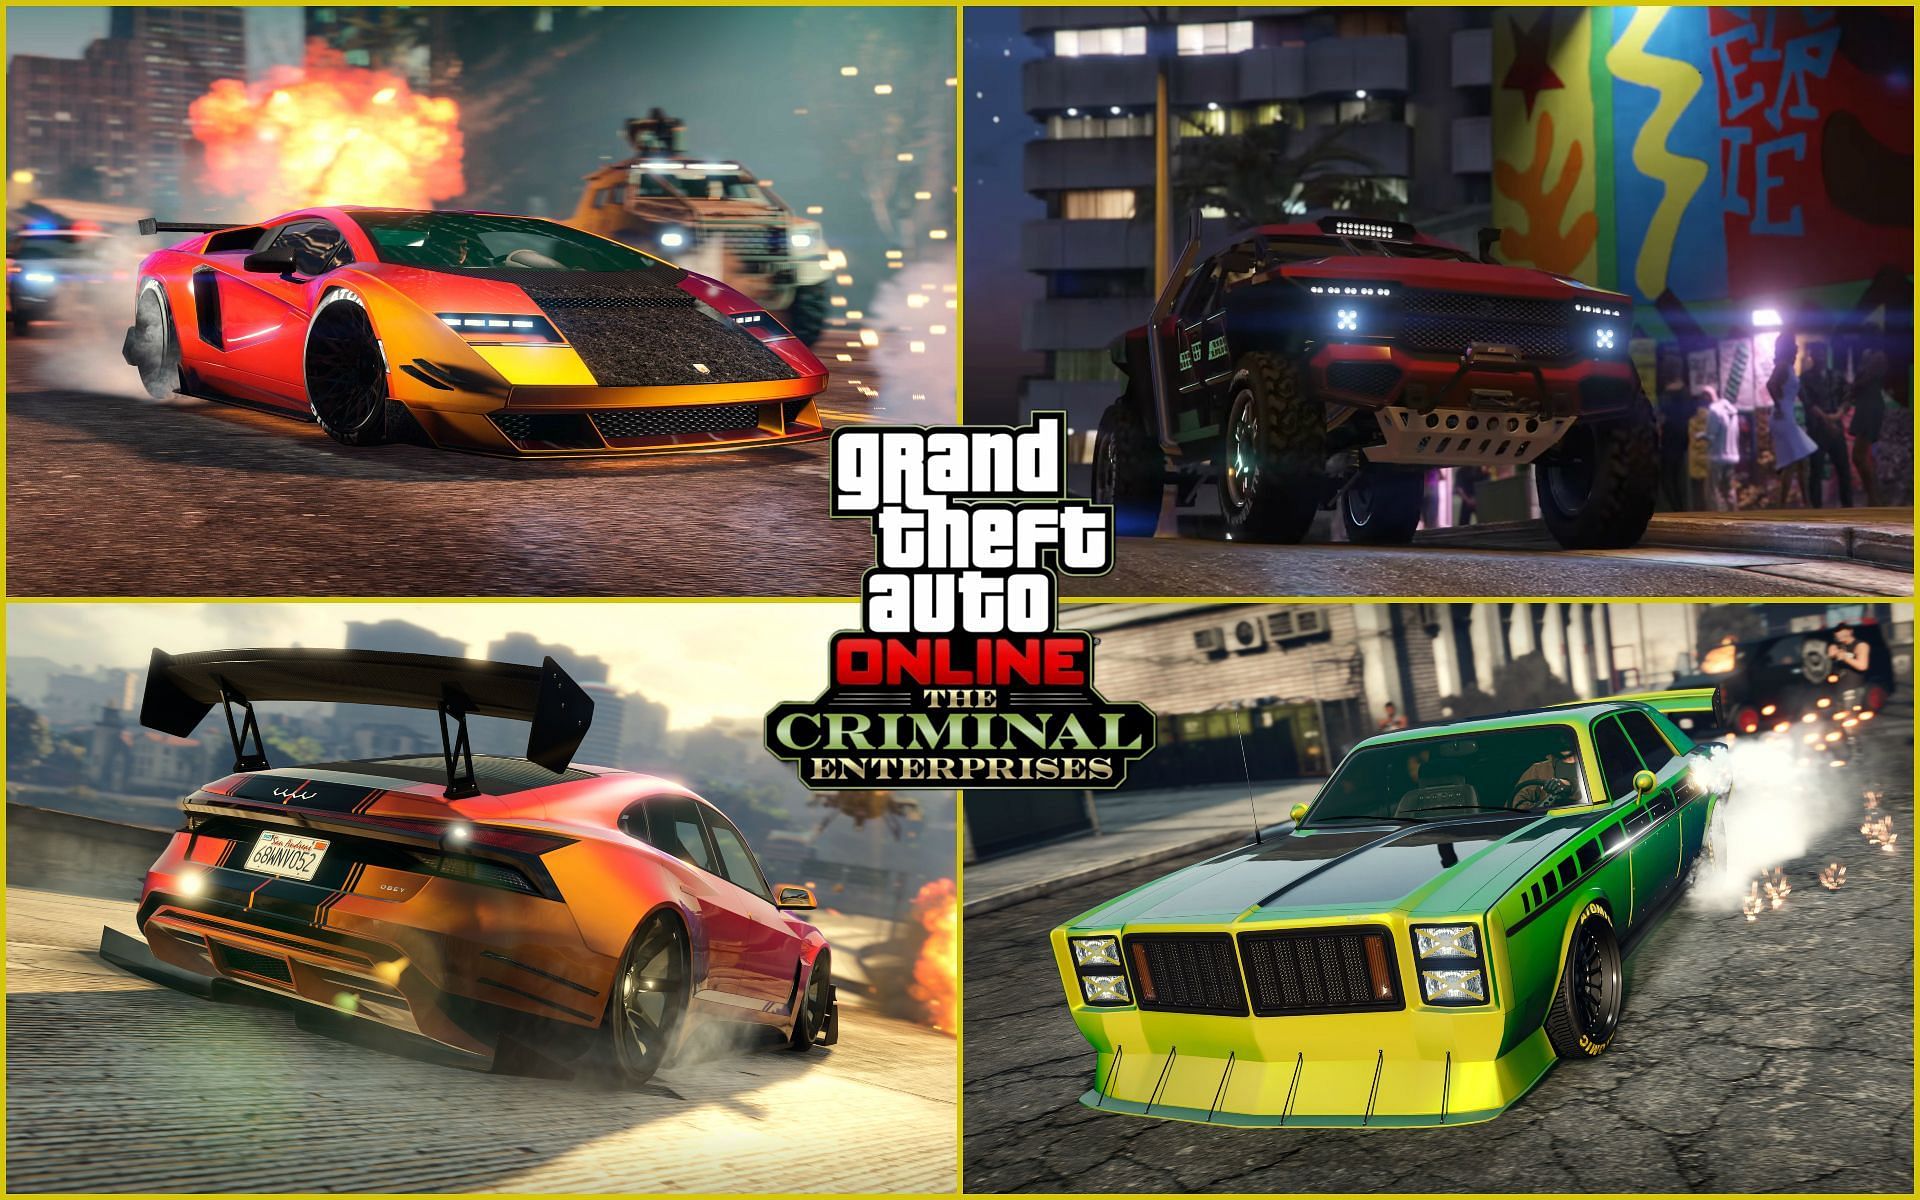 Some of the cars arriving in GTA Online with The Criminal Enterprises DLC (Images via Rockstar Games)